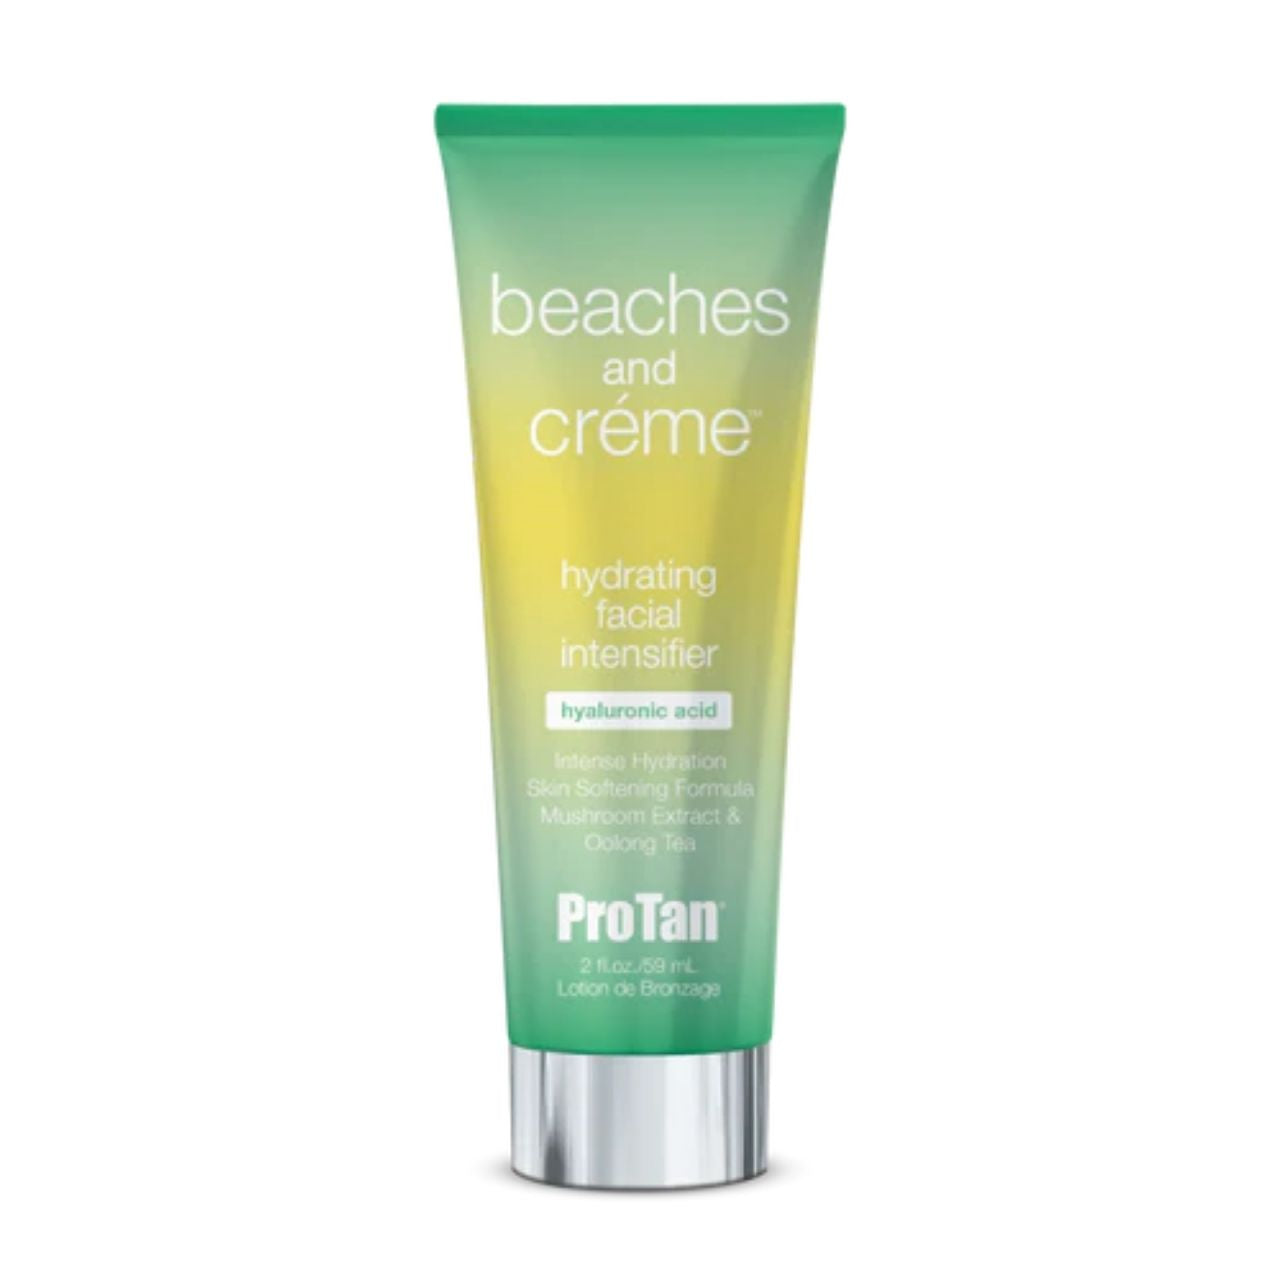 Pro Tan Beaches & Crème Hydrating Facial Intensifier Bottle